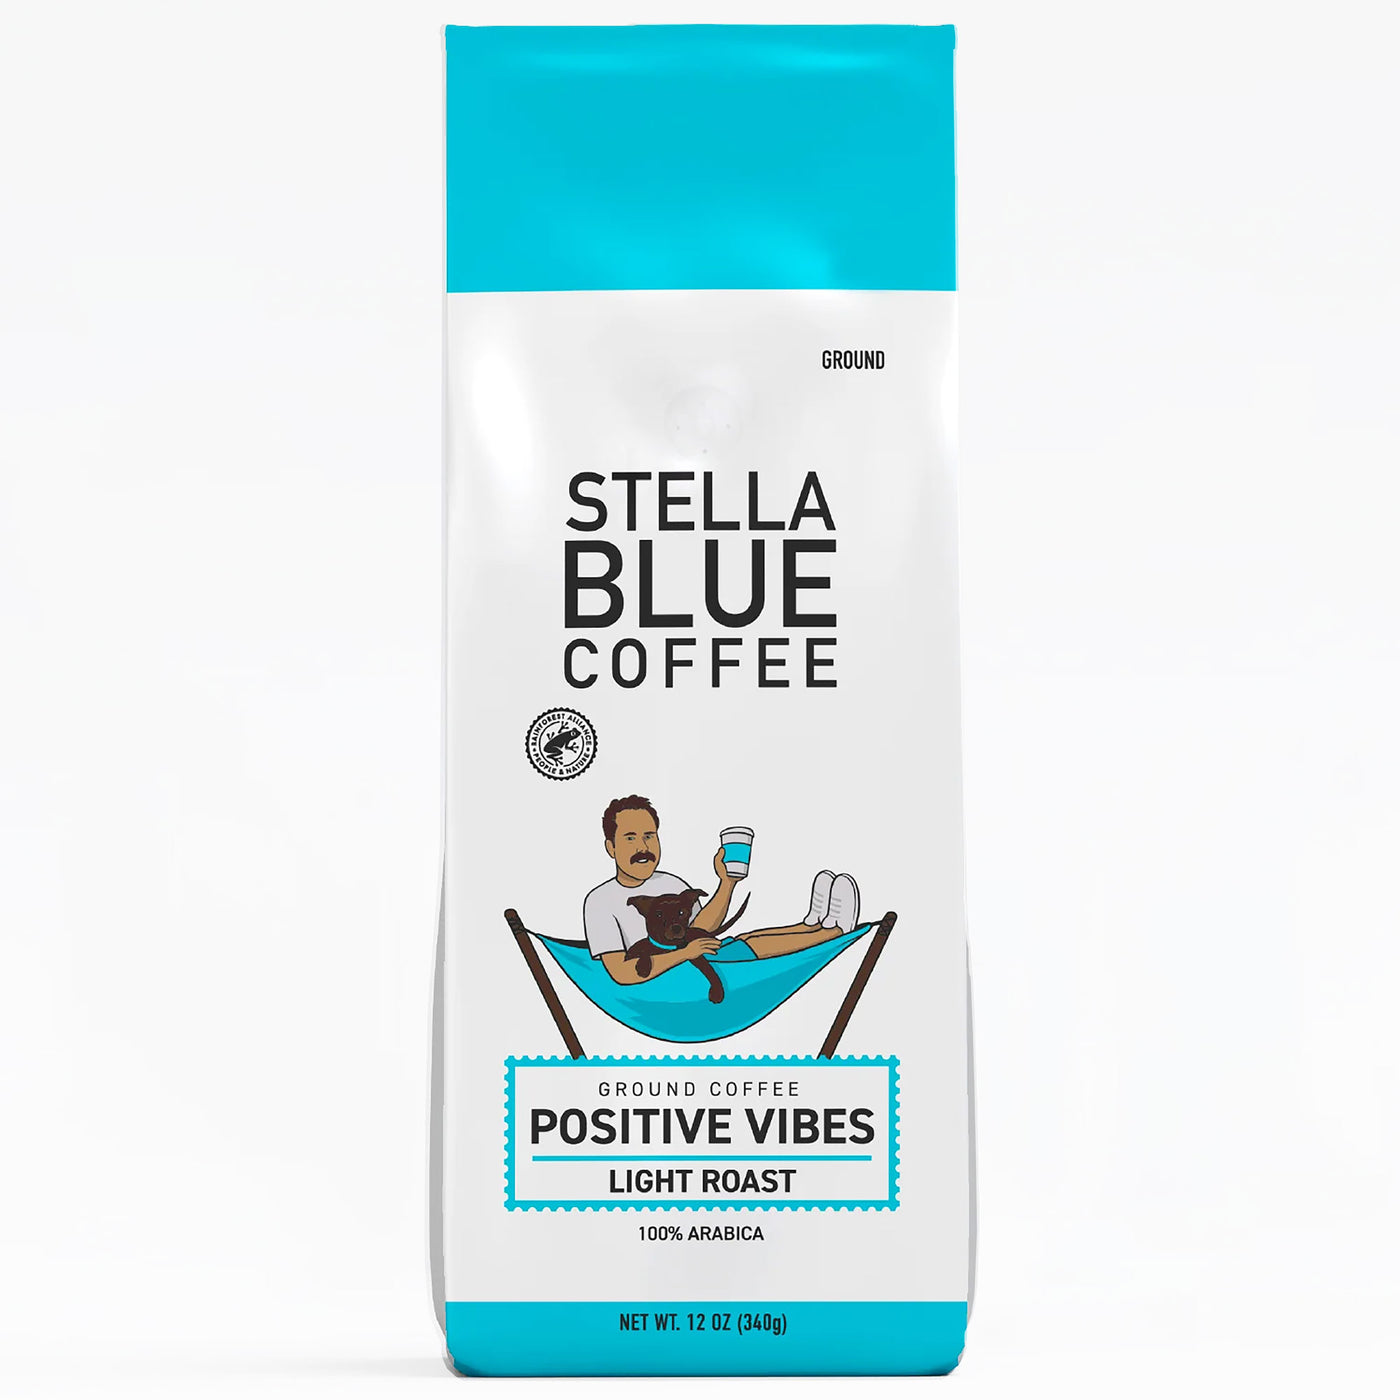 Positive Vibes (Base Coffee Club)